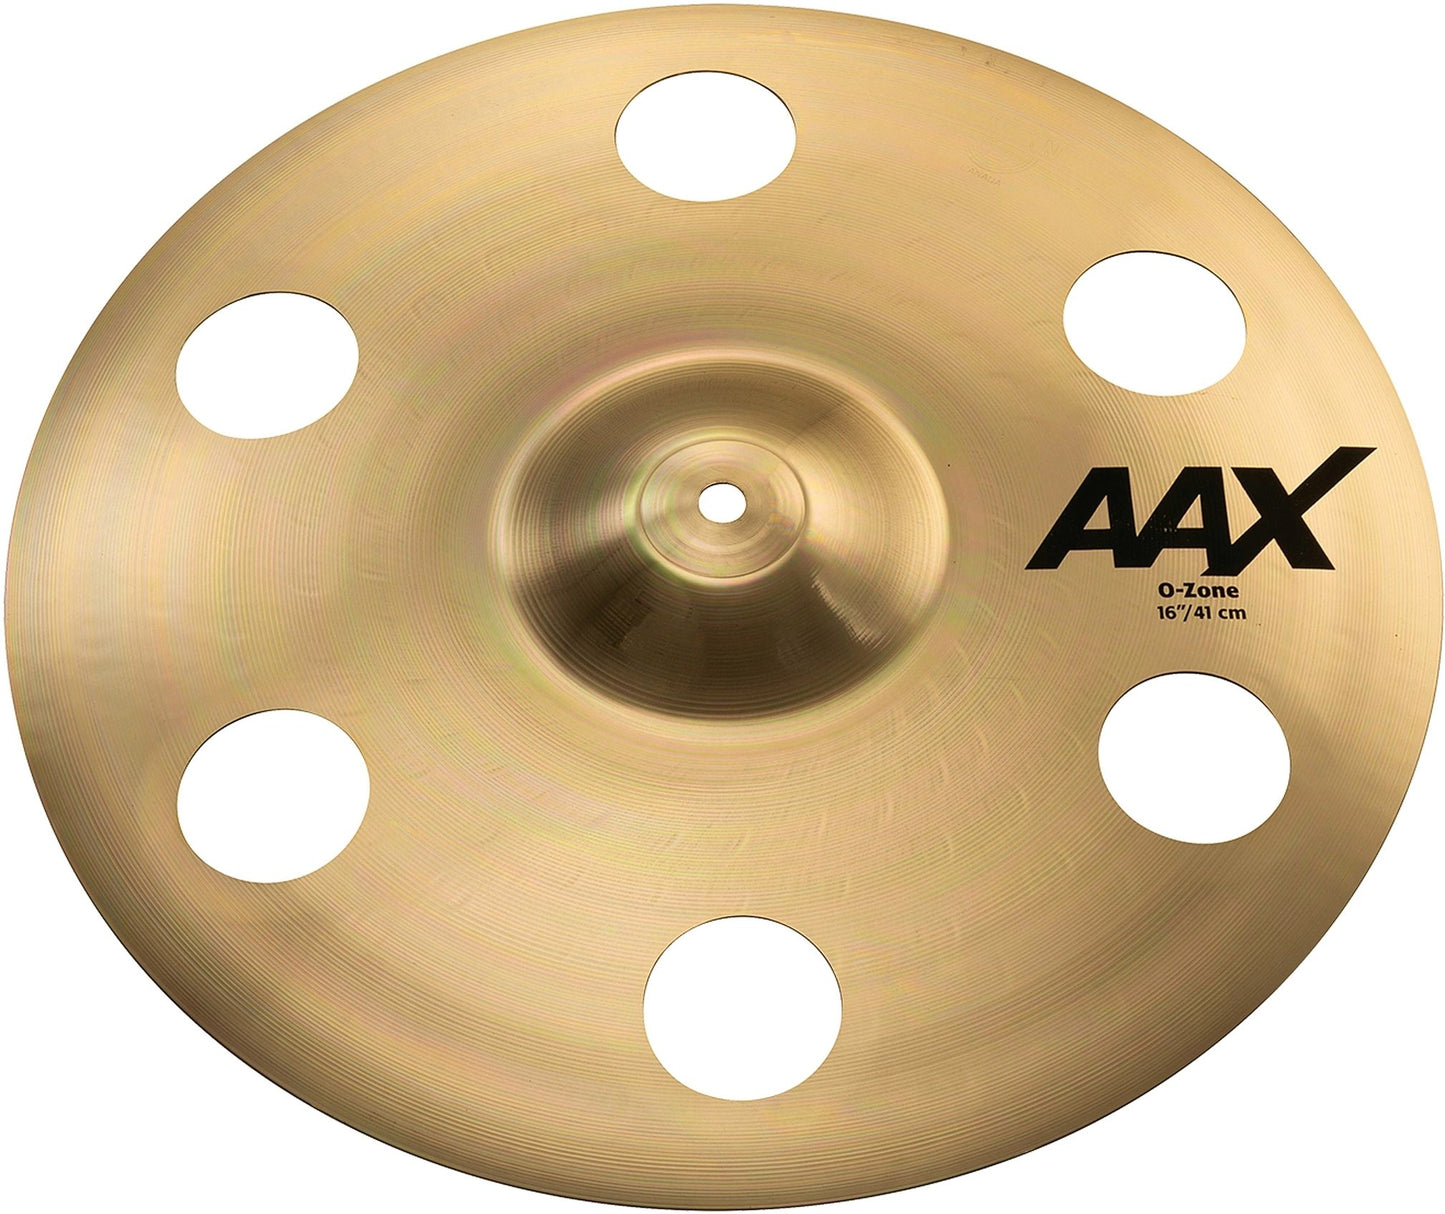 Sabian AAX O-Zone Crash Cymbal, Brilliant Finish, 16 Inch